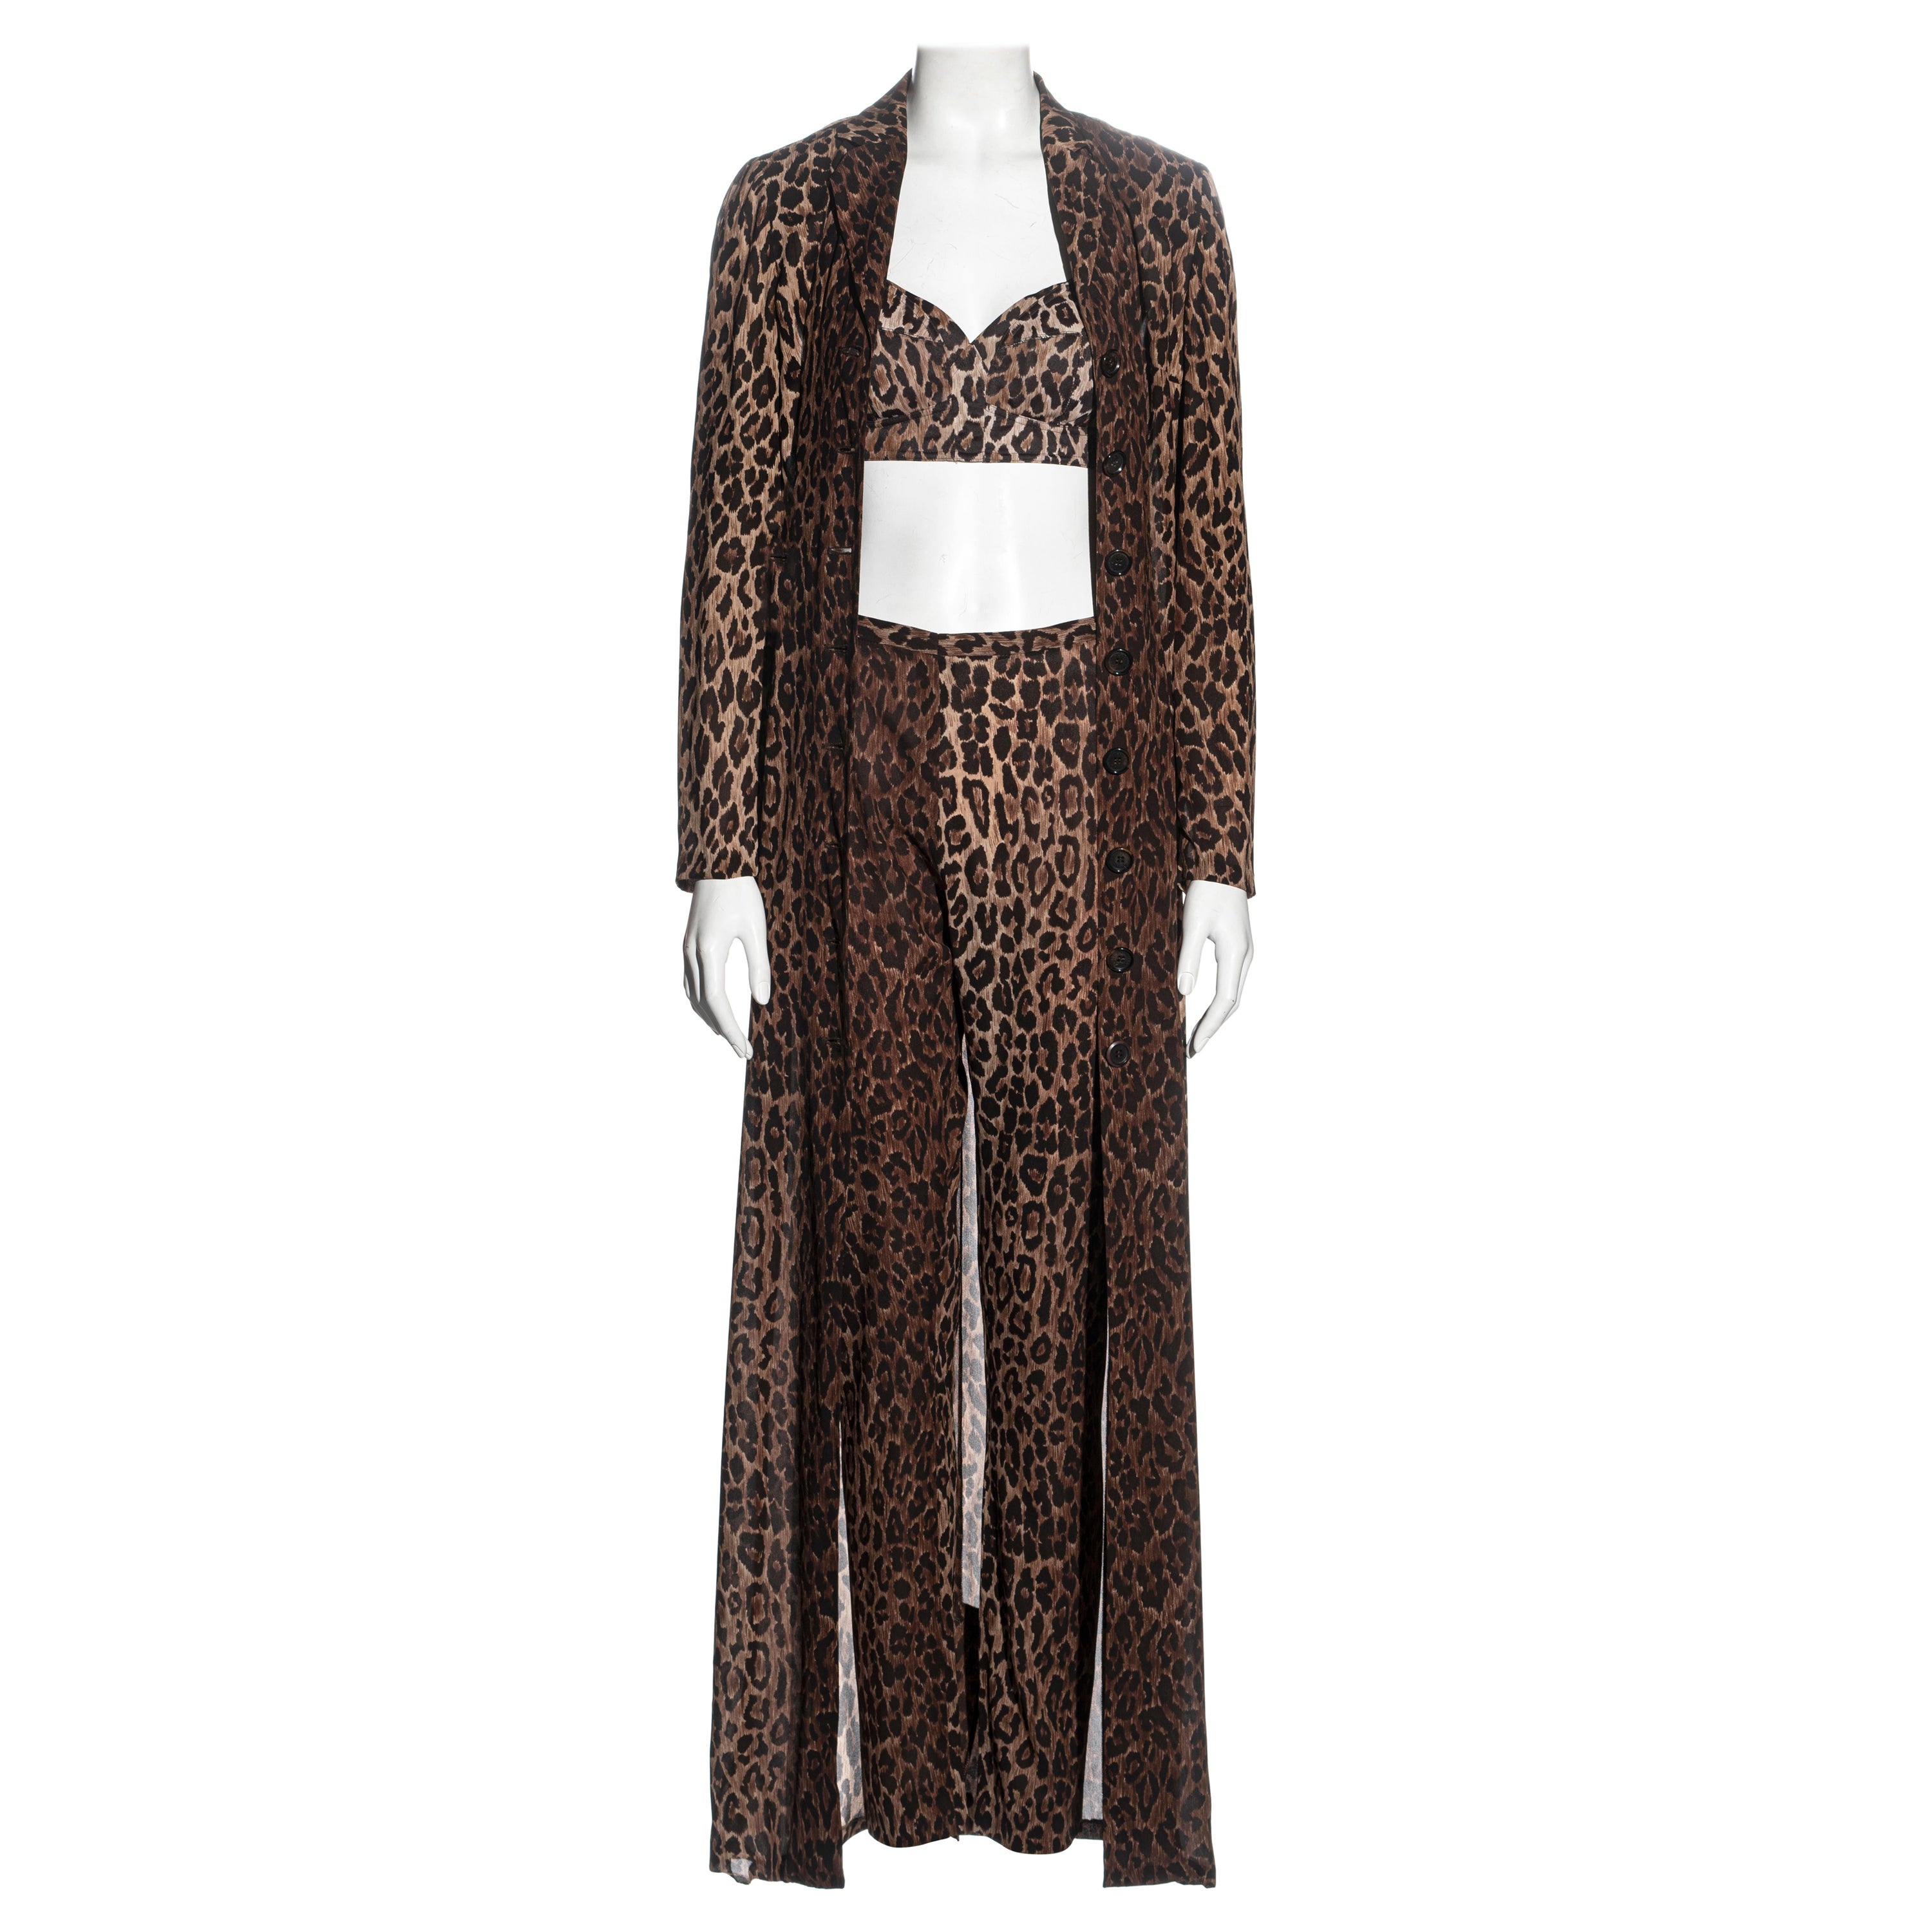 Dolce & Gabbana leopard print silk coat, pants and bra ensemble, ss 1997